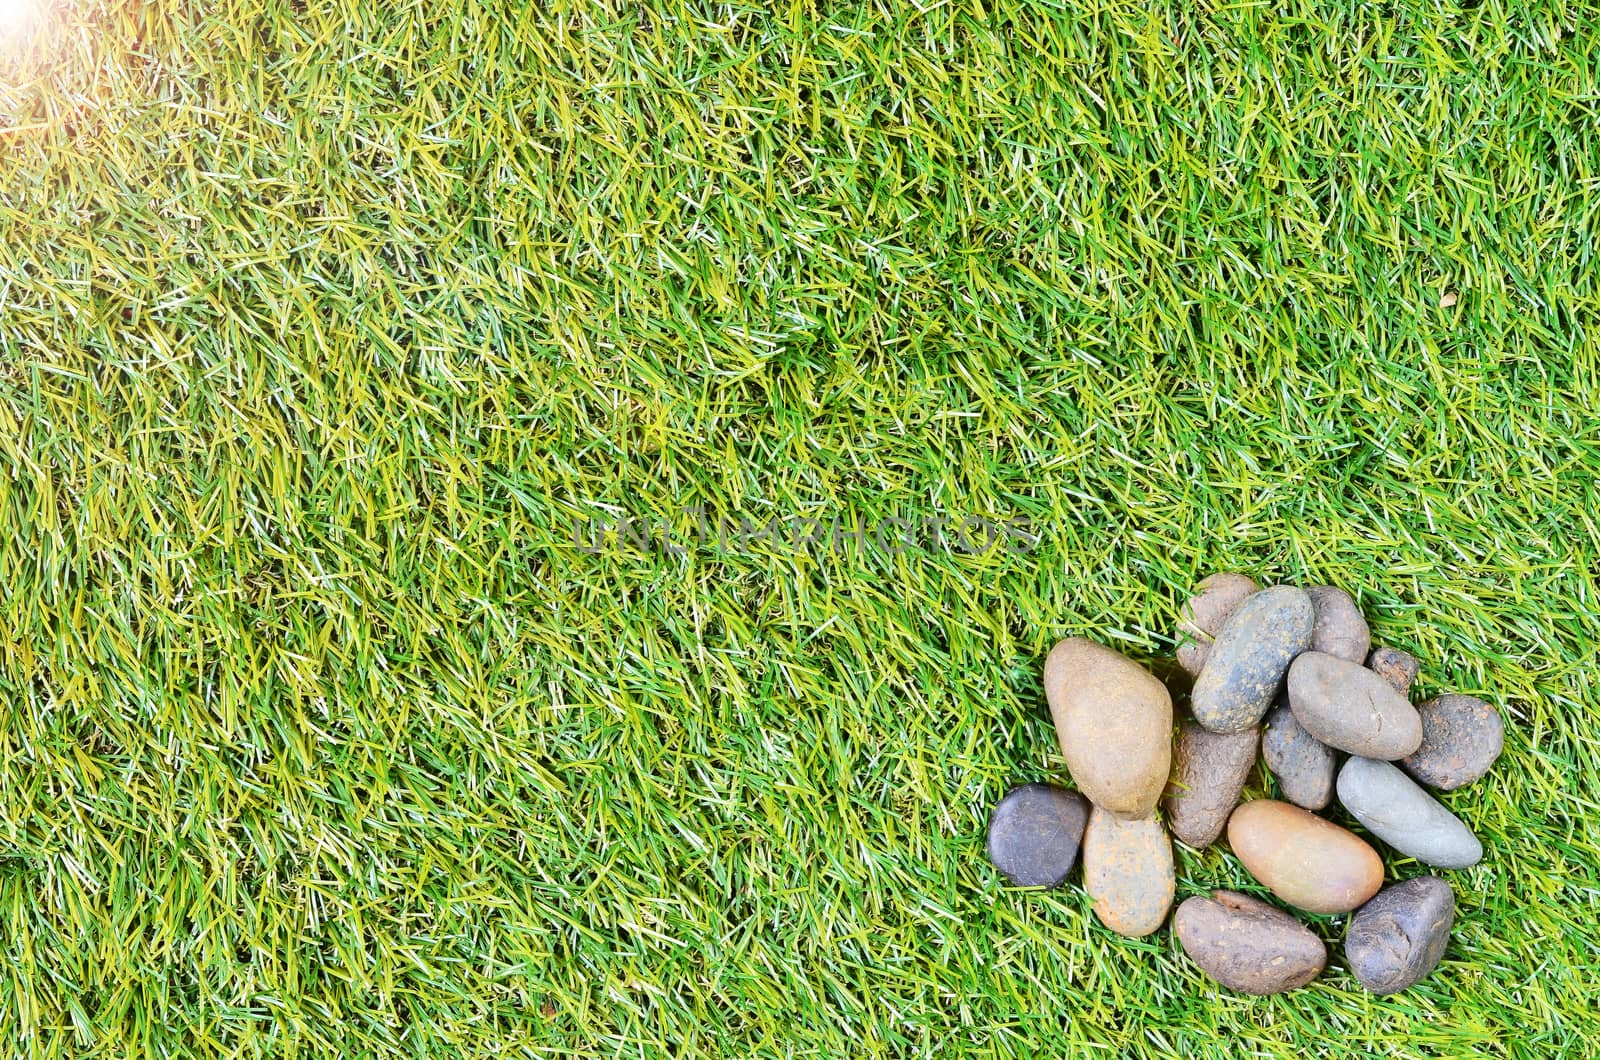 stone on grass background by phochi